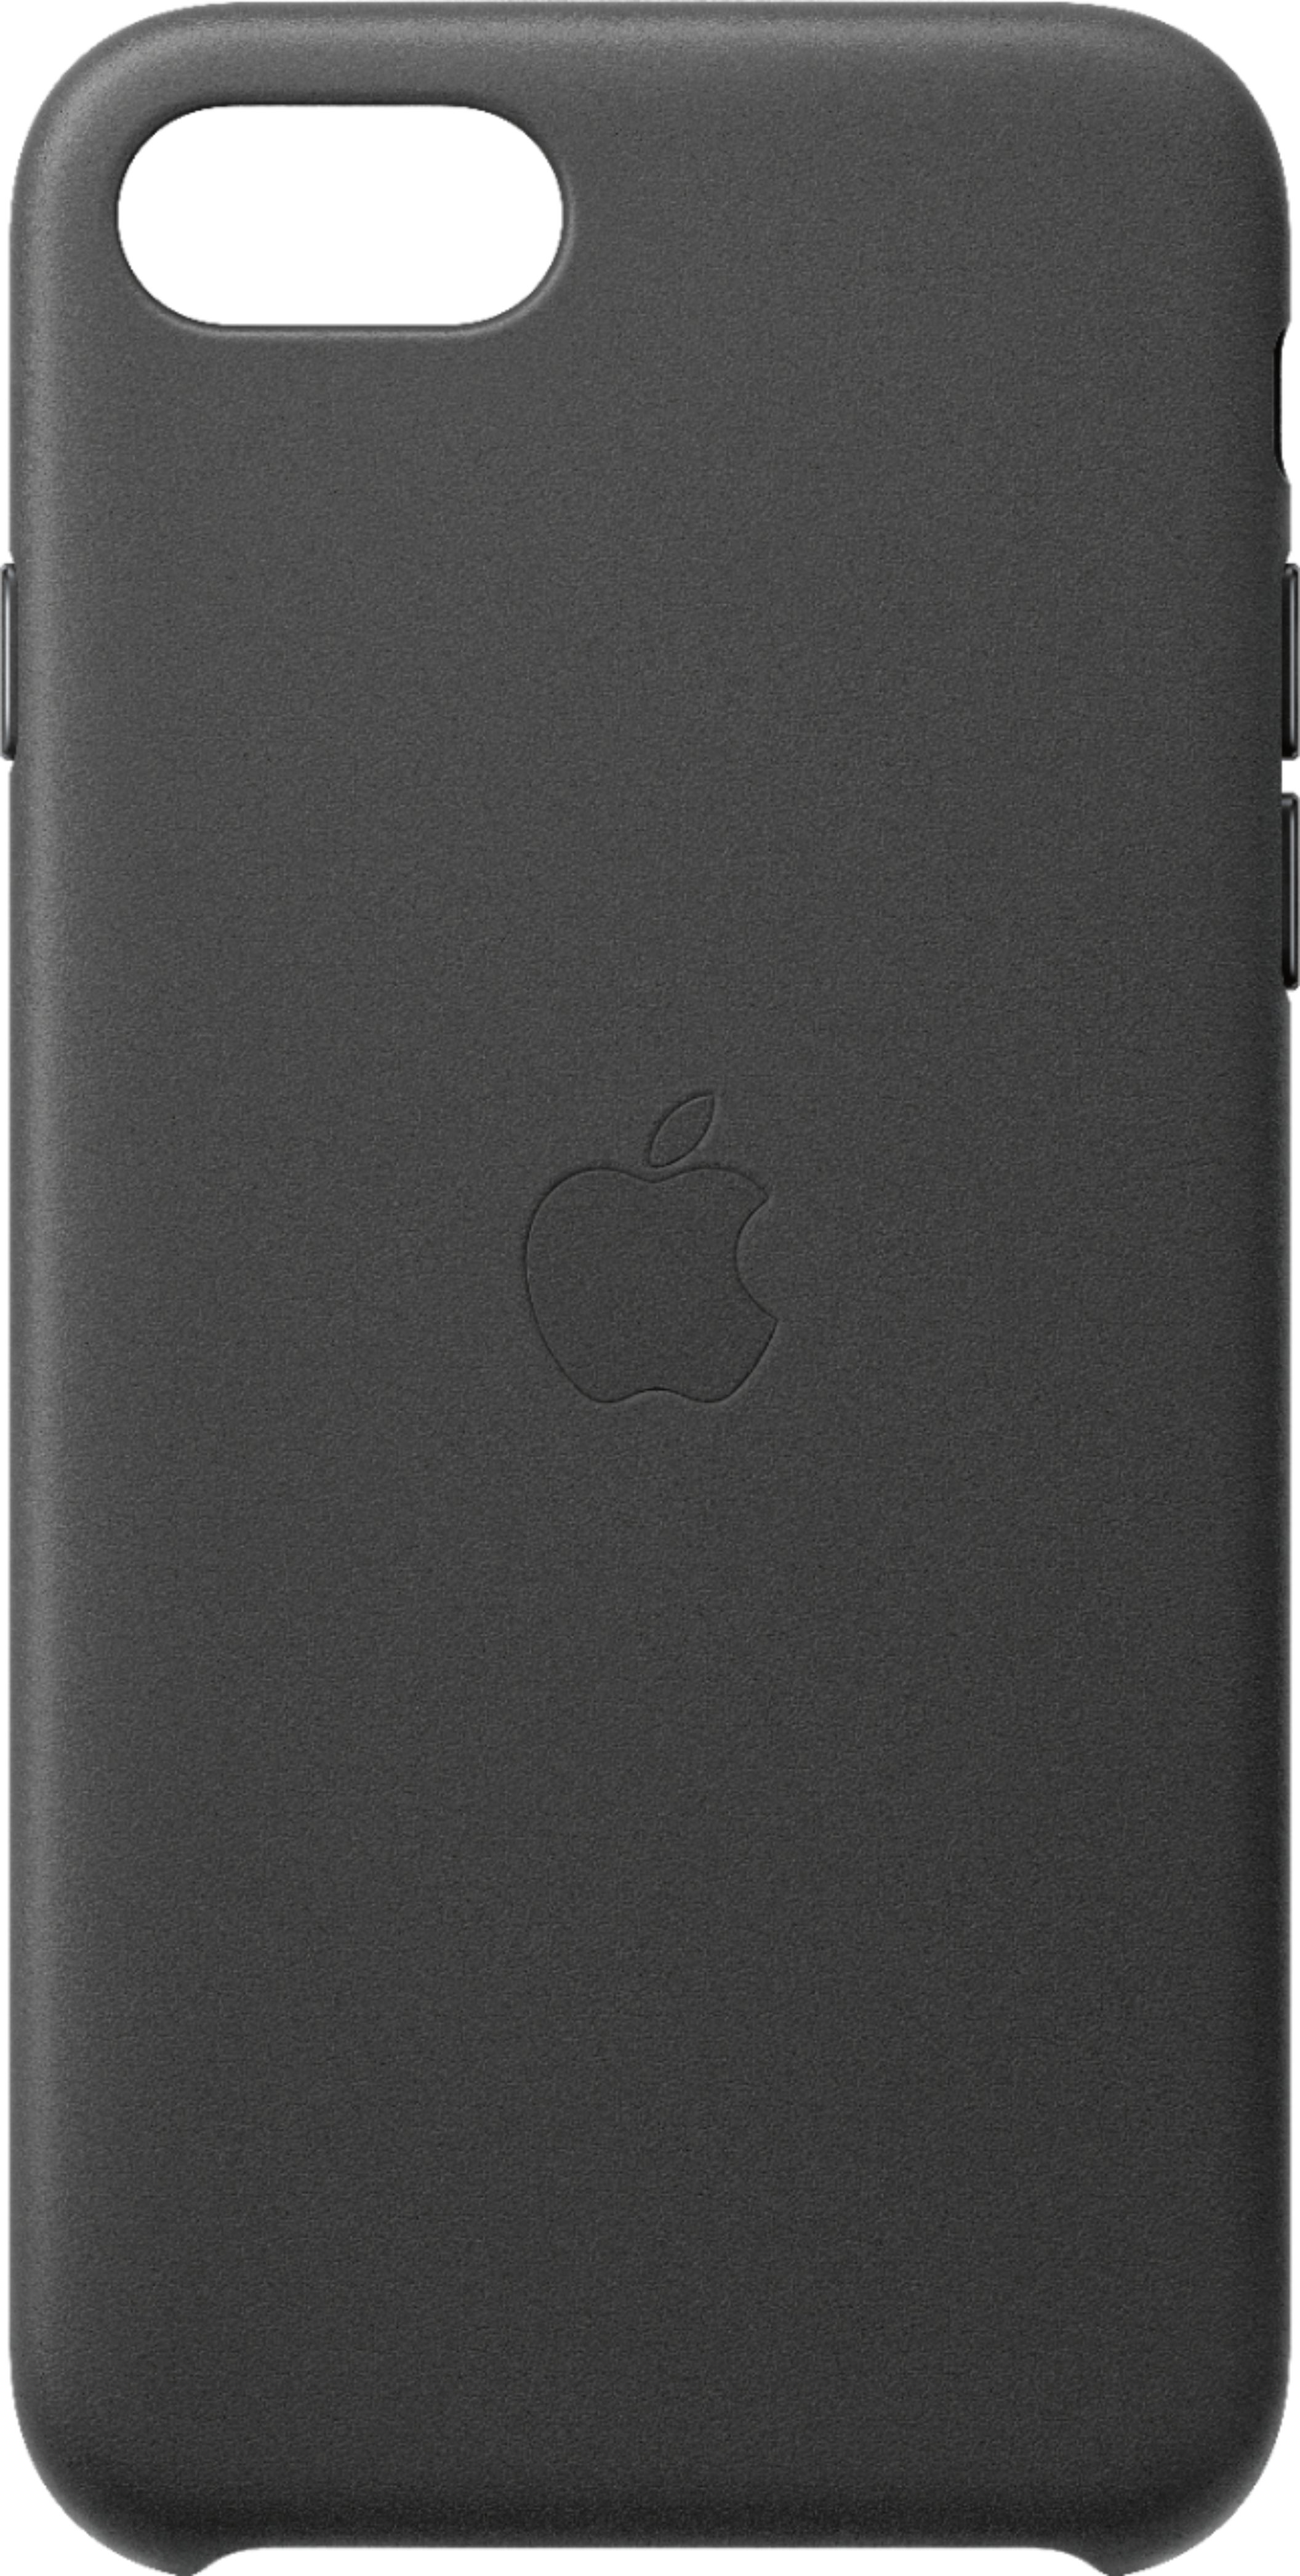 Apple - Leather Case for Apple iPhone SE Black